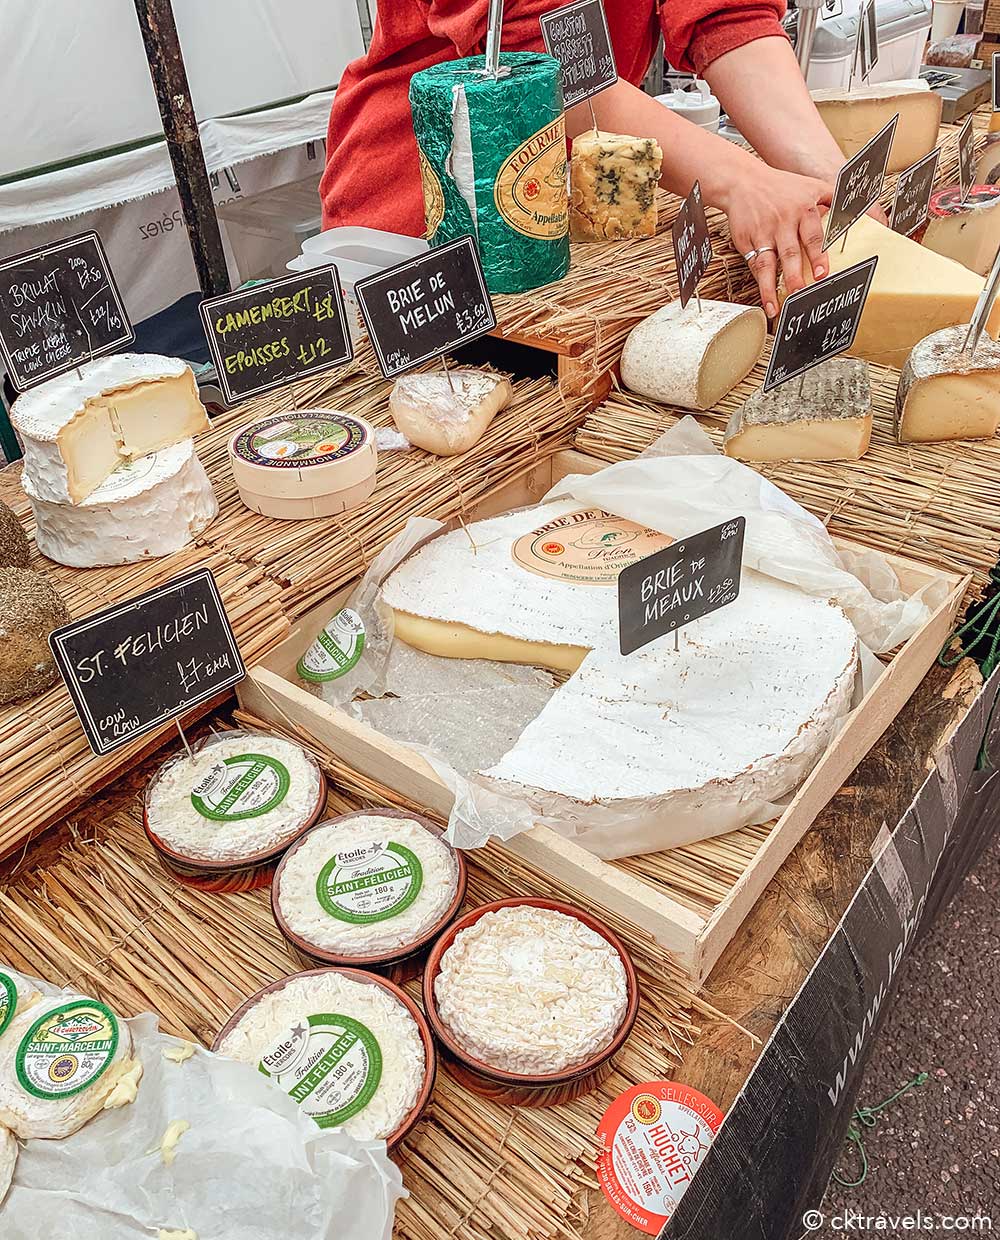 Broadway Market, London Fields Cheese stall